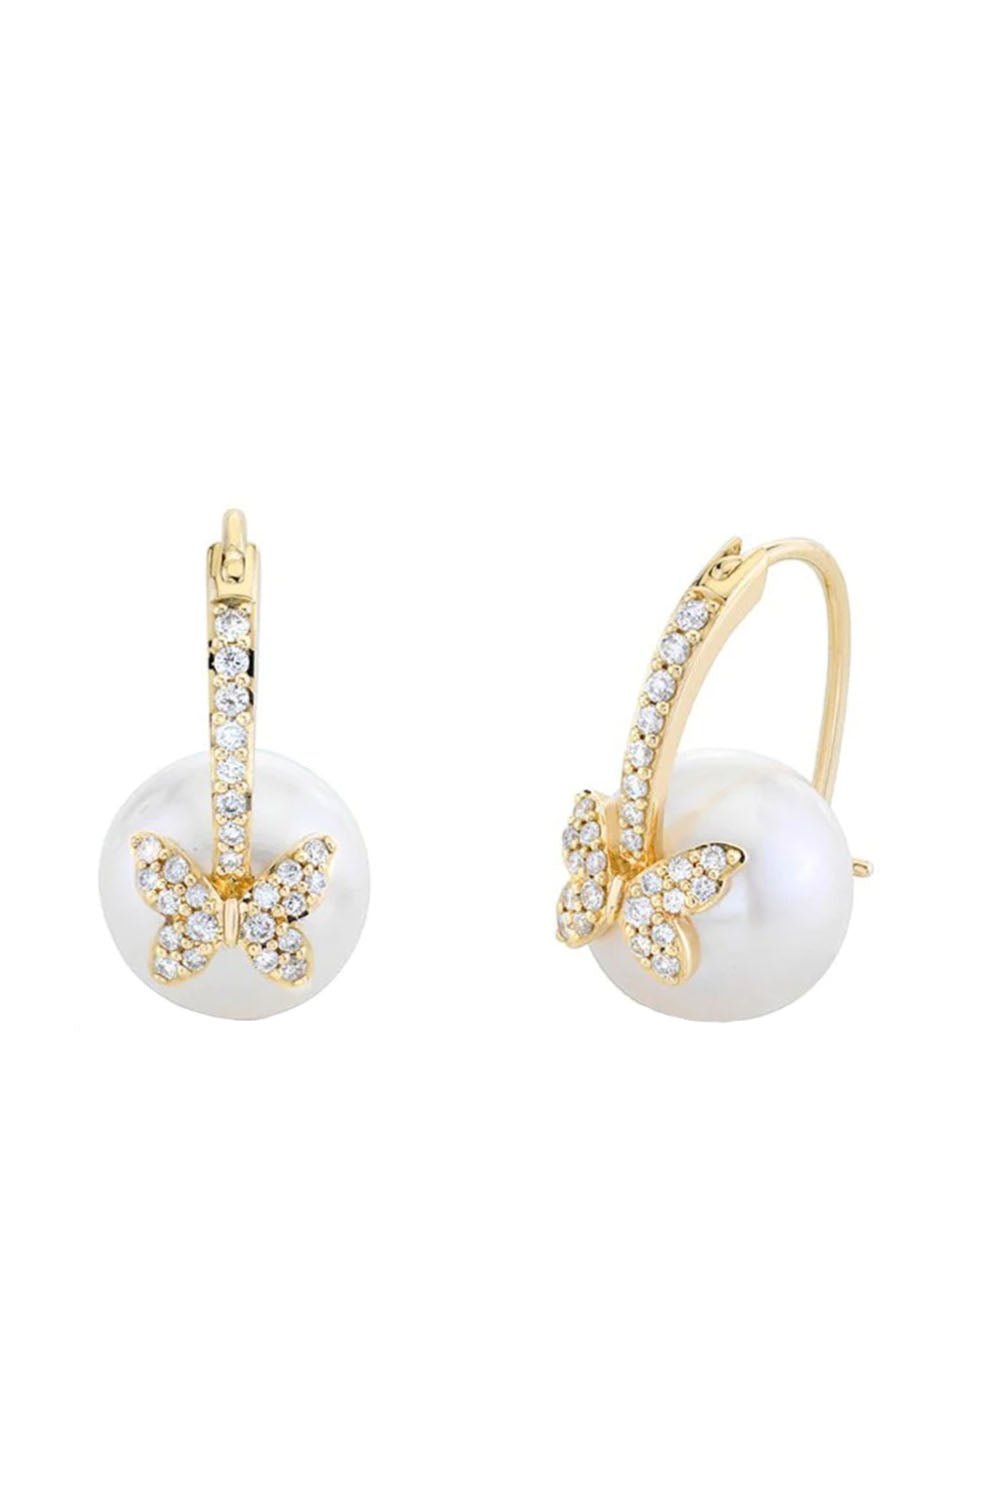 SYDNEY EVAN-Butterly Pearl Earrings-YELLOW GOLD